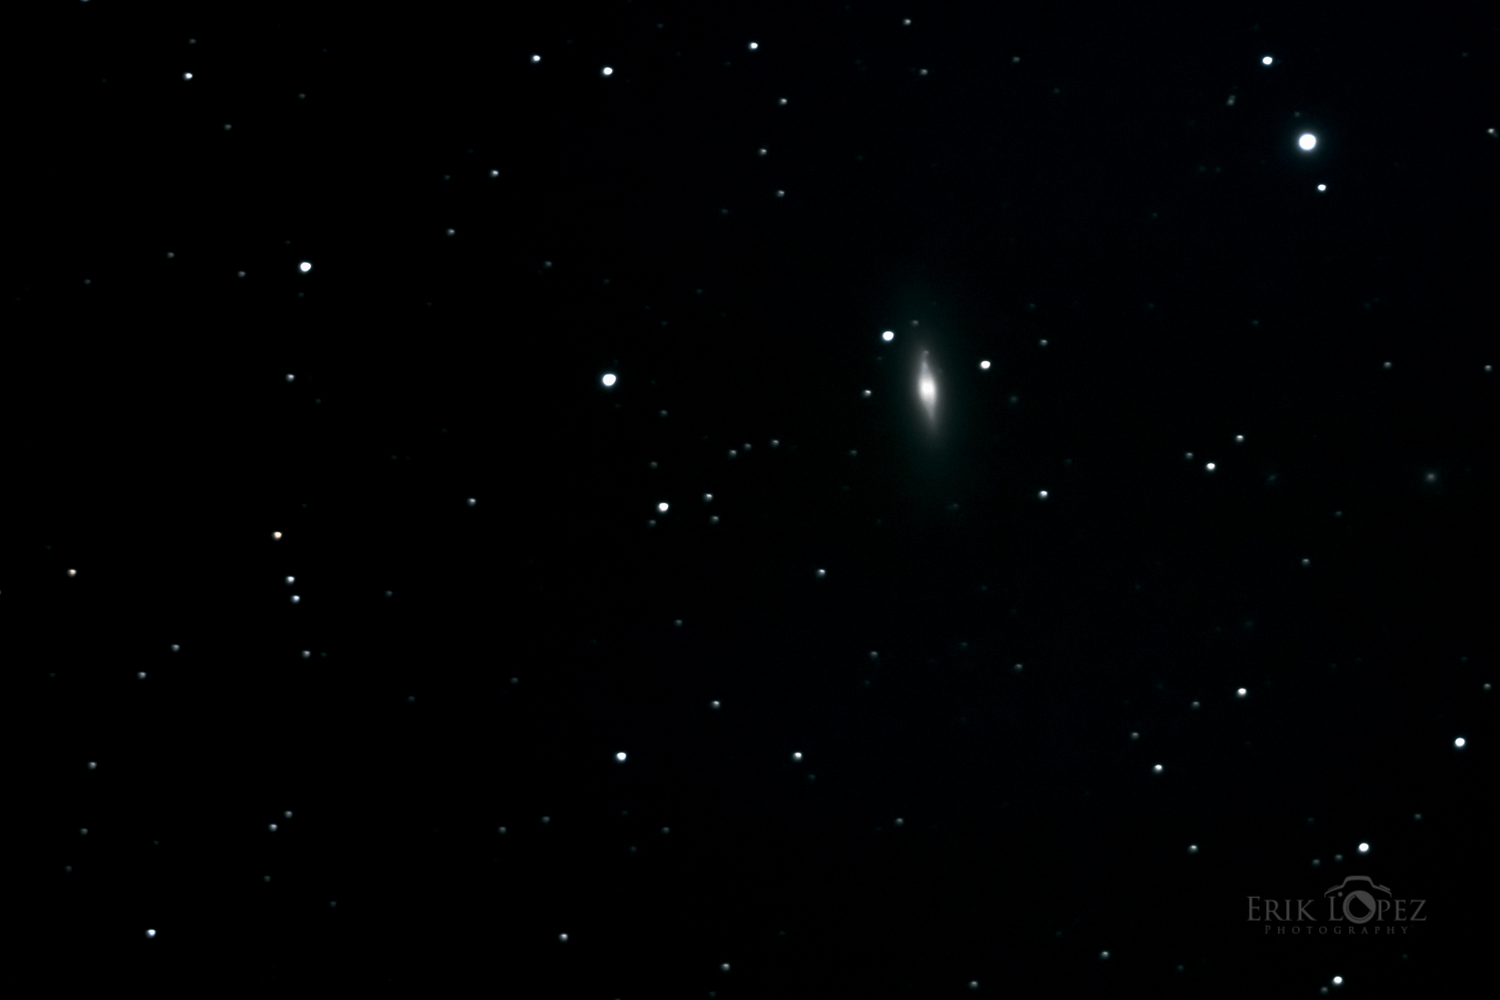 M102 - The Spindle Galaxy. Carretero, Puebla, México. 13 de marzo de 2021, 02:36 hrs. f/0 13 sec ISO-12800 Celestron Advanced VX 9.25